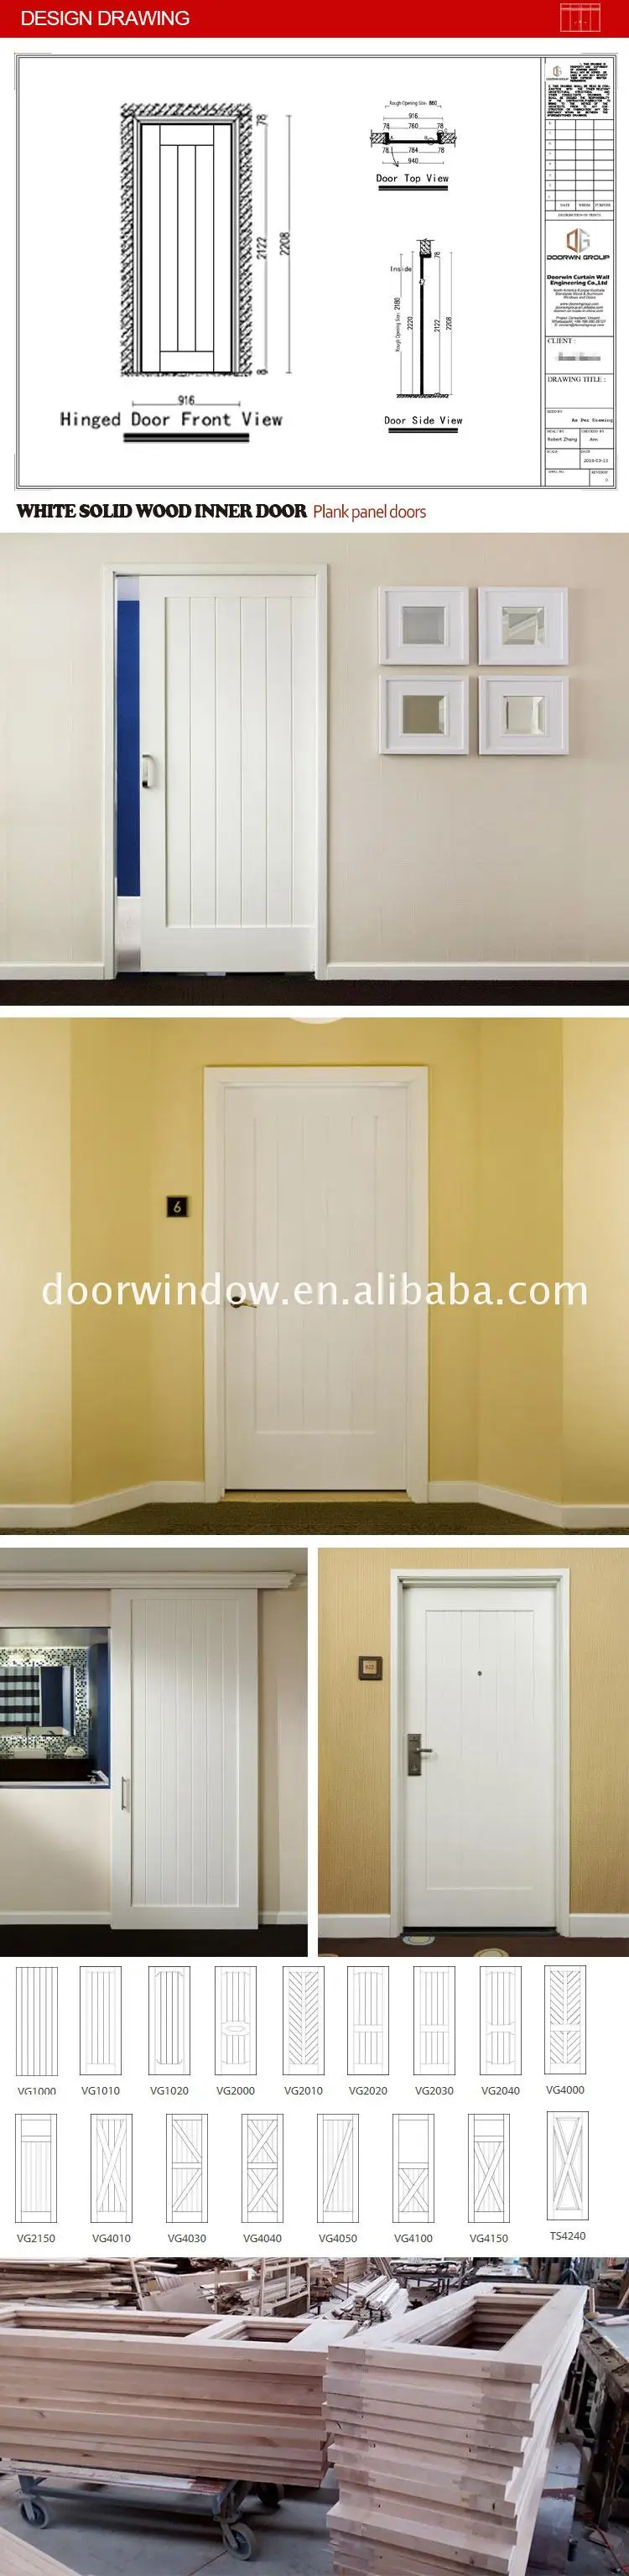 Top quality mdf interior doors living room french door images